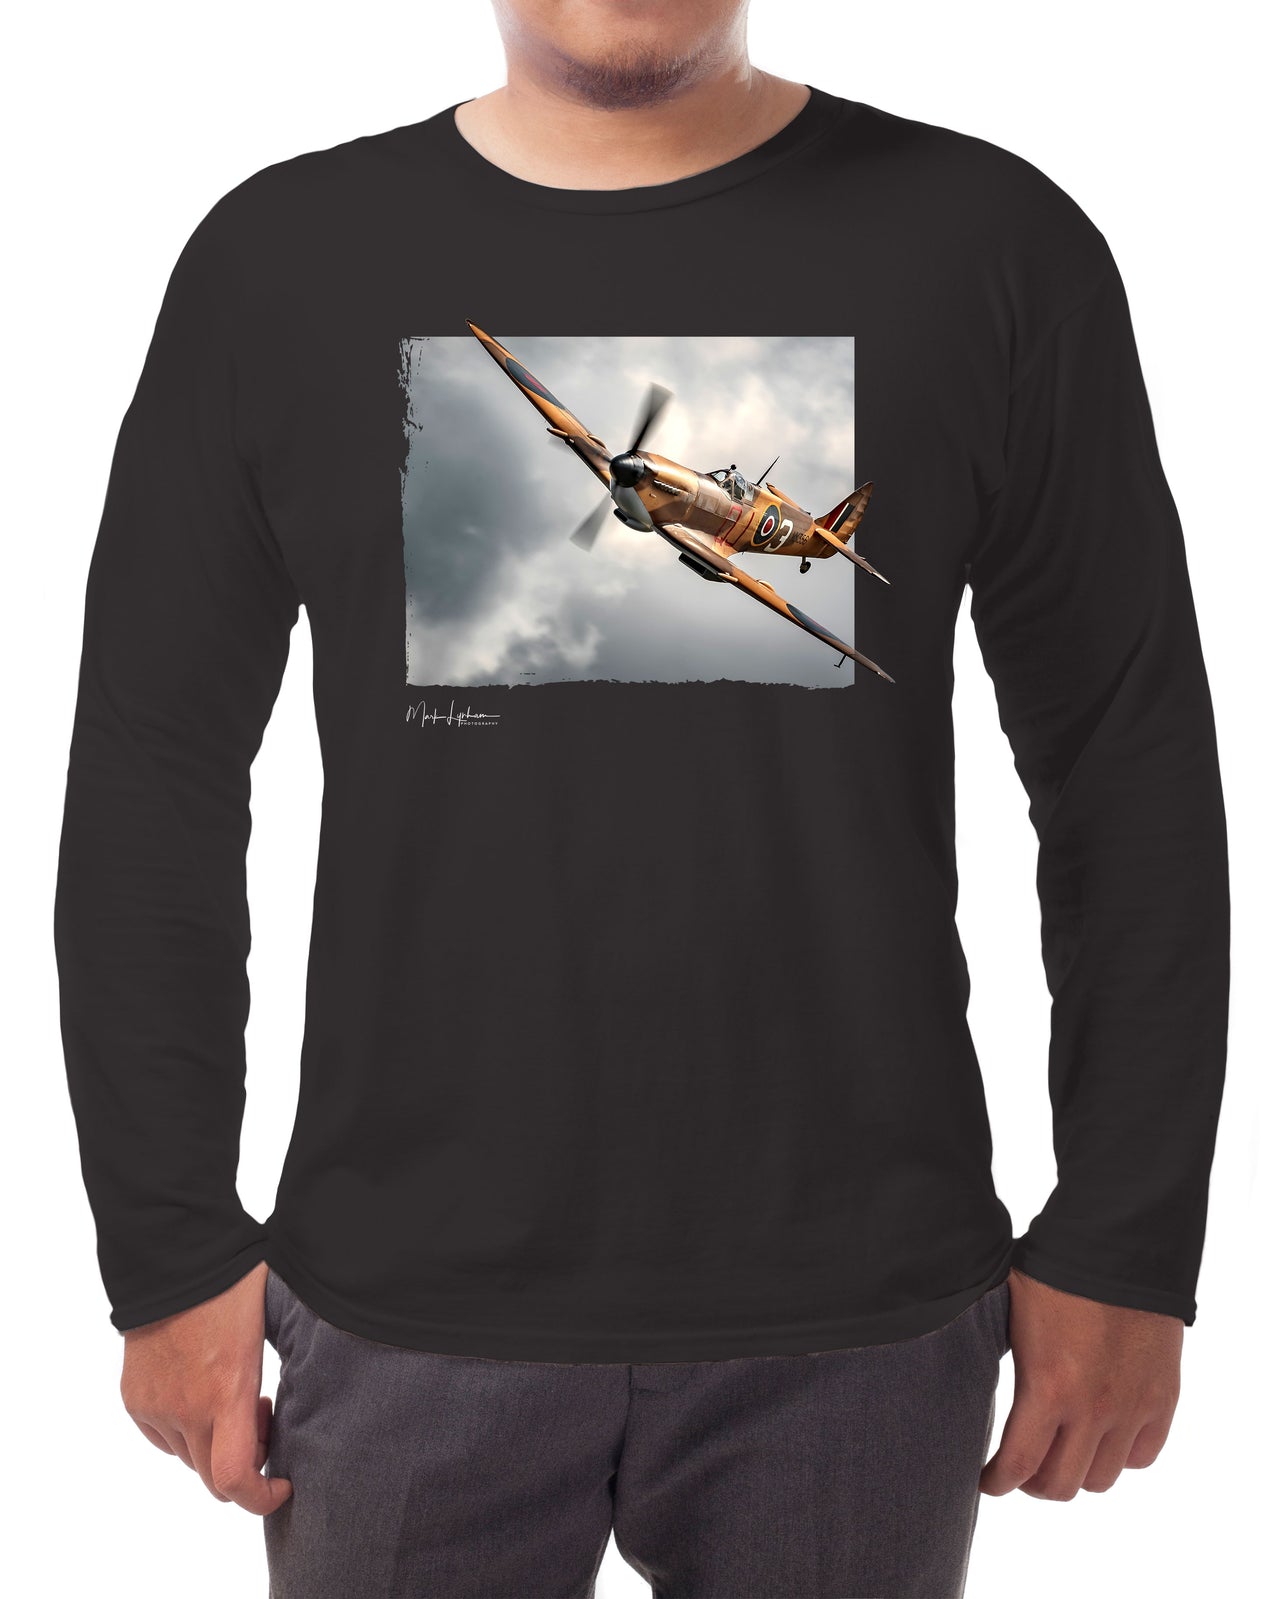 Spitfire MkLFIXe - Long-sleeve T-shirt